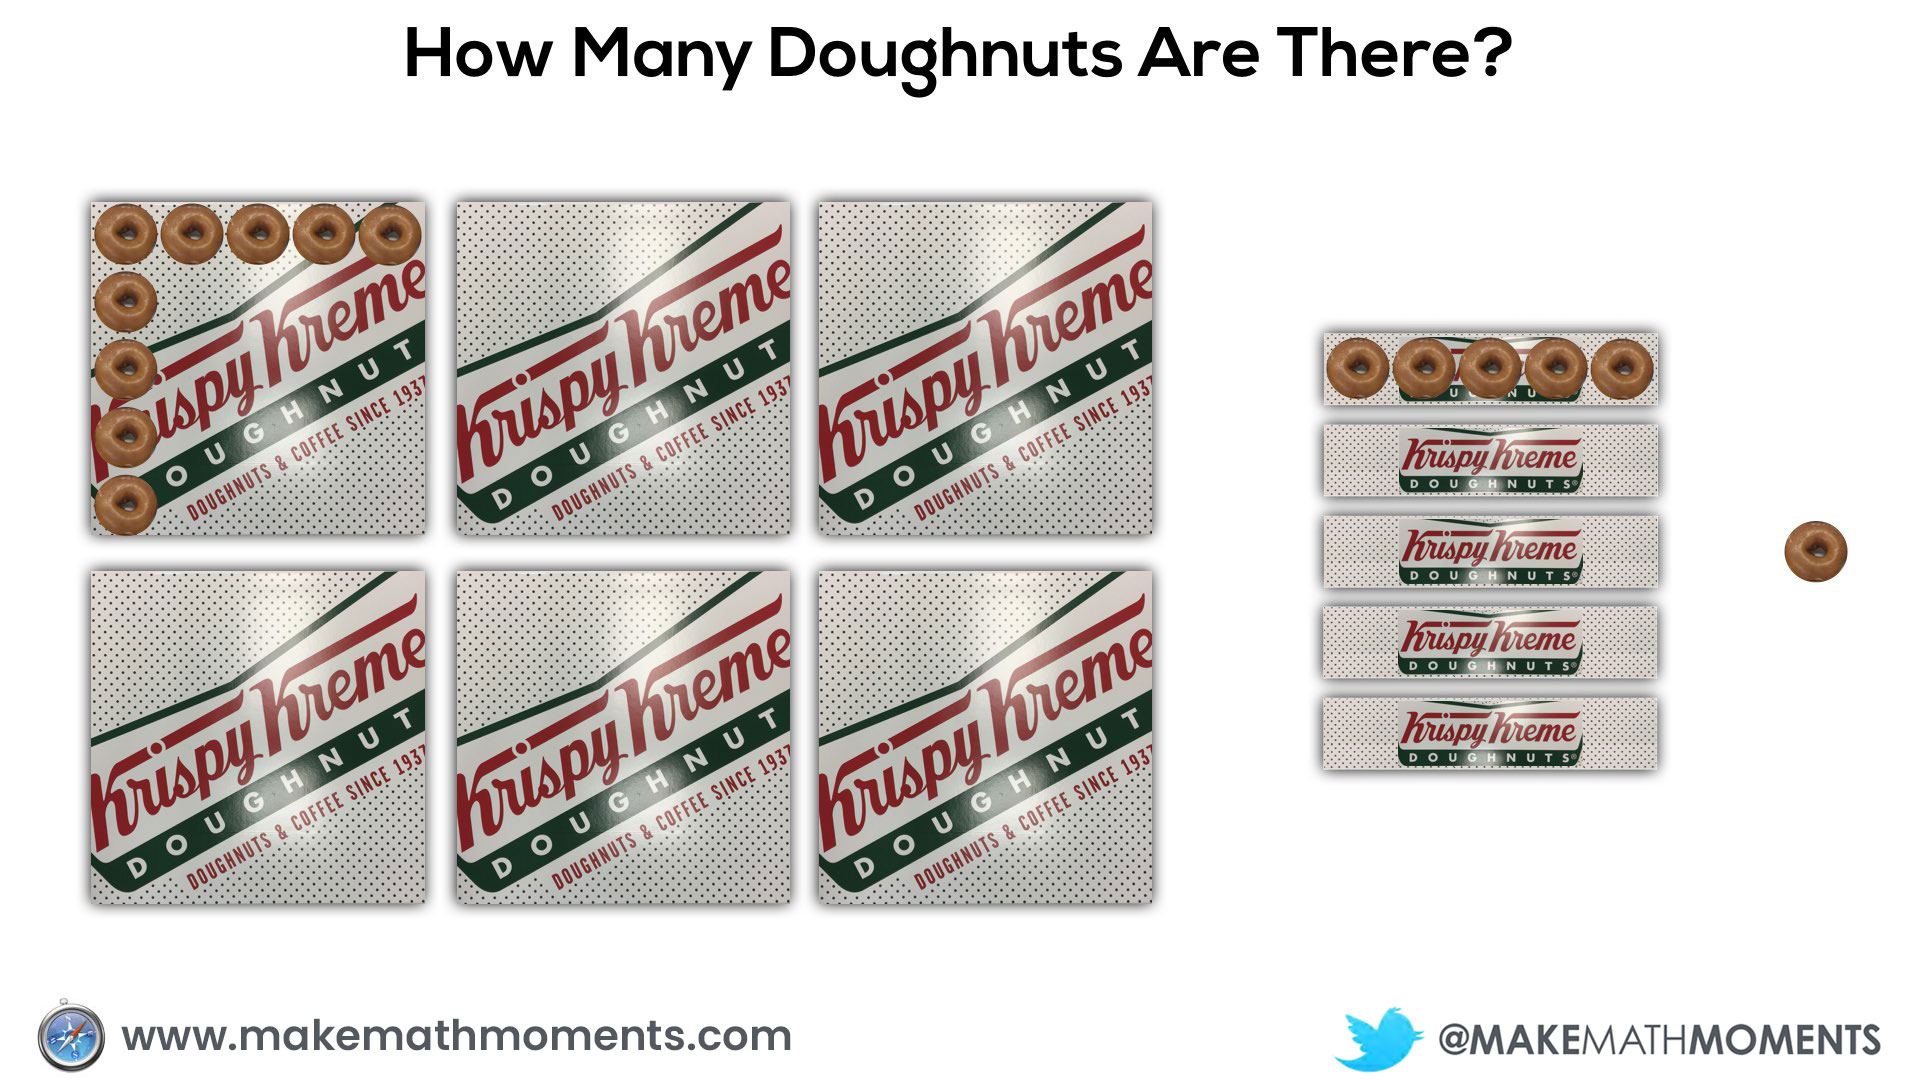 5 doughnuts in each box